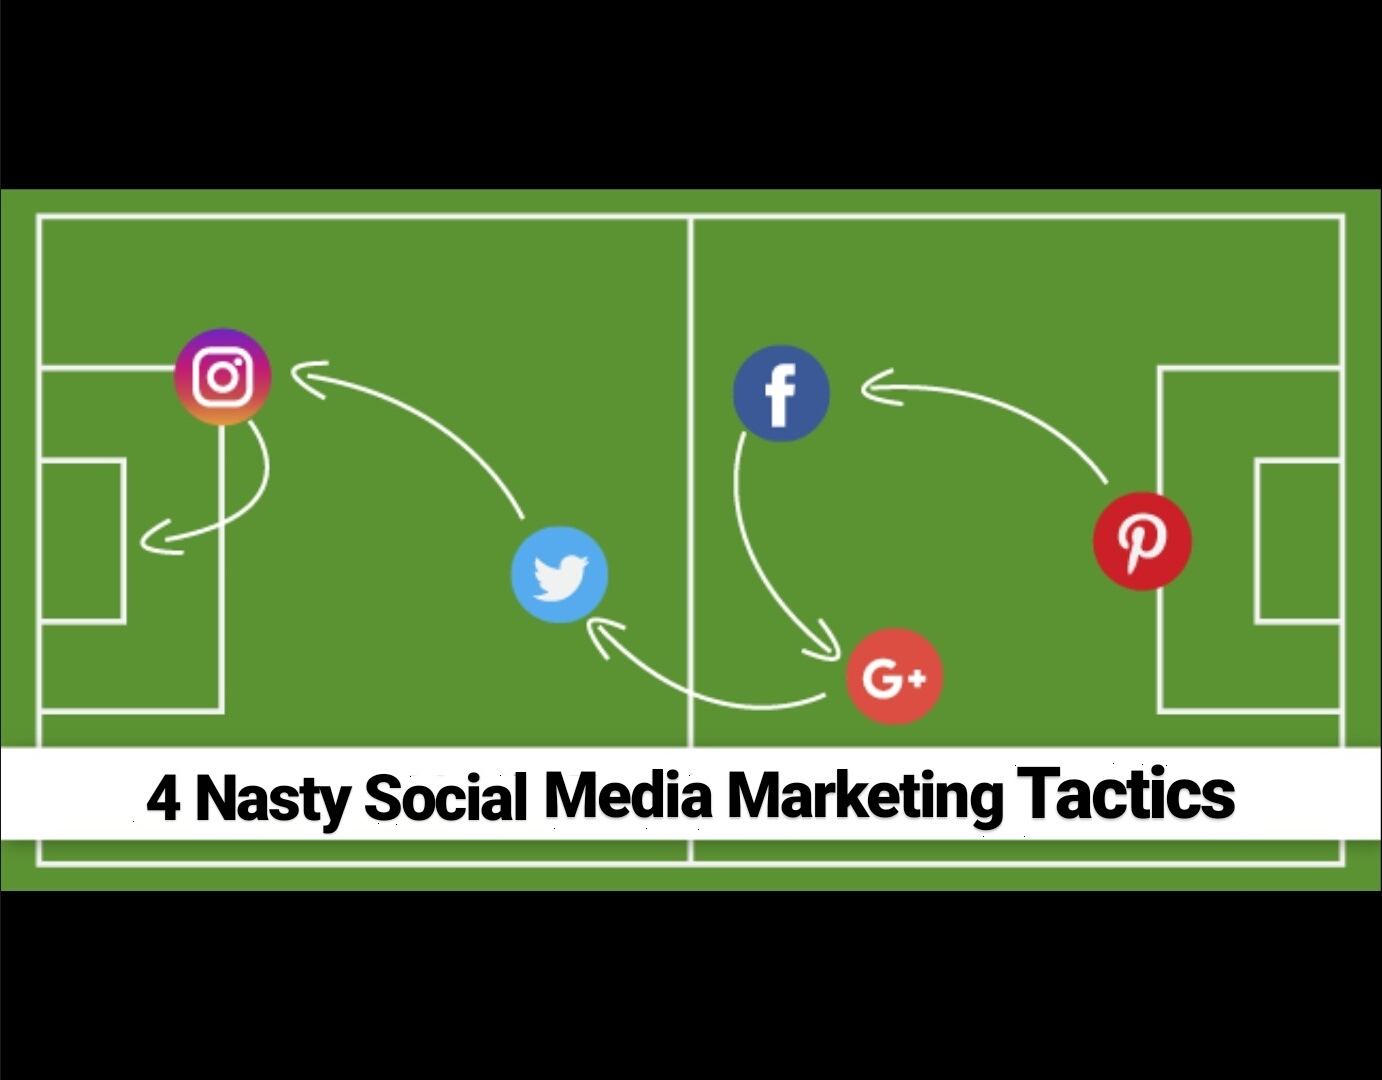  4 Nasty Social Media Marketing Tactics and why you should Avoid them